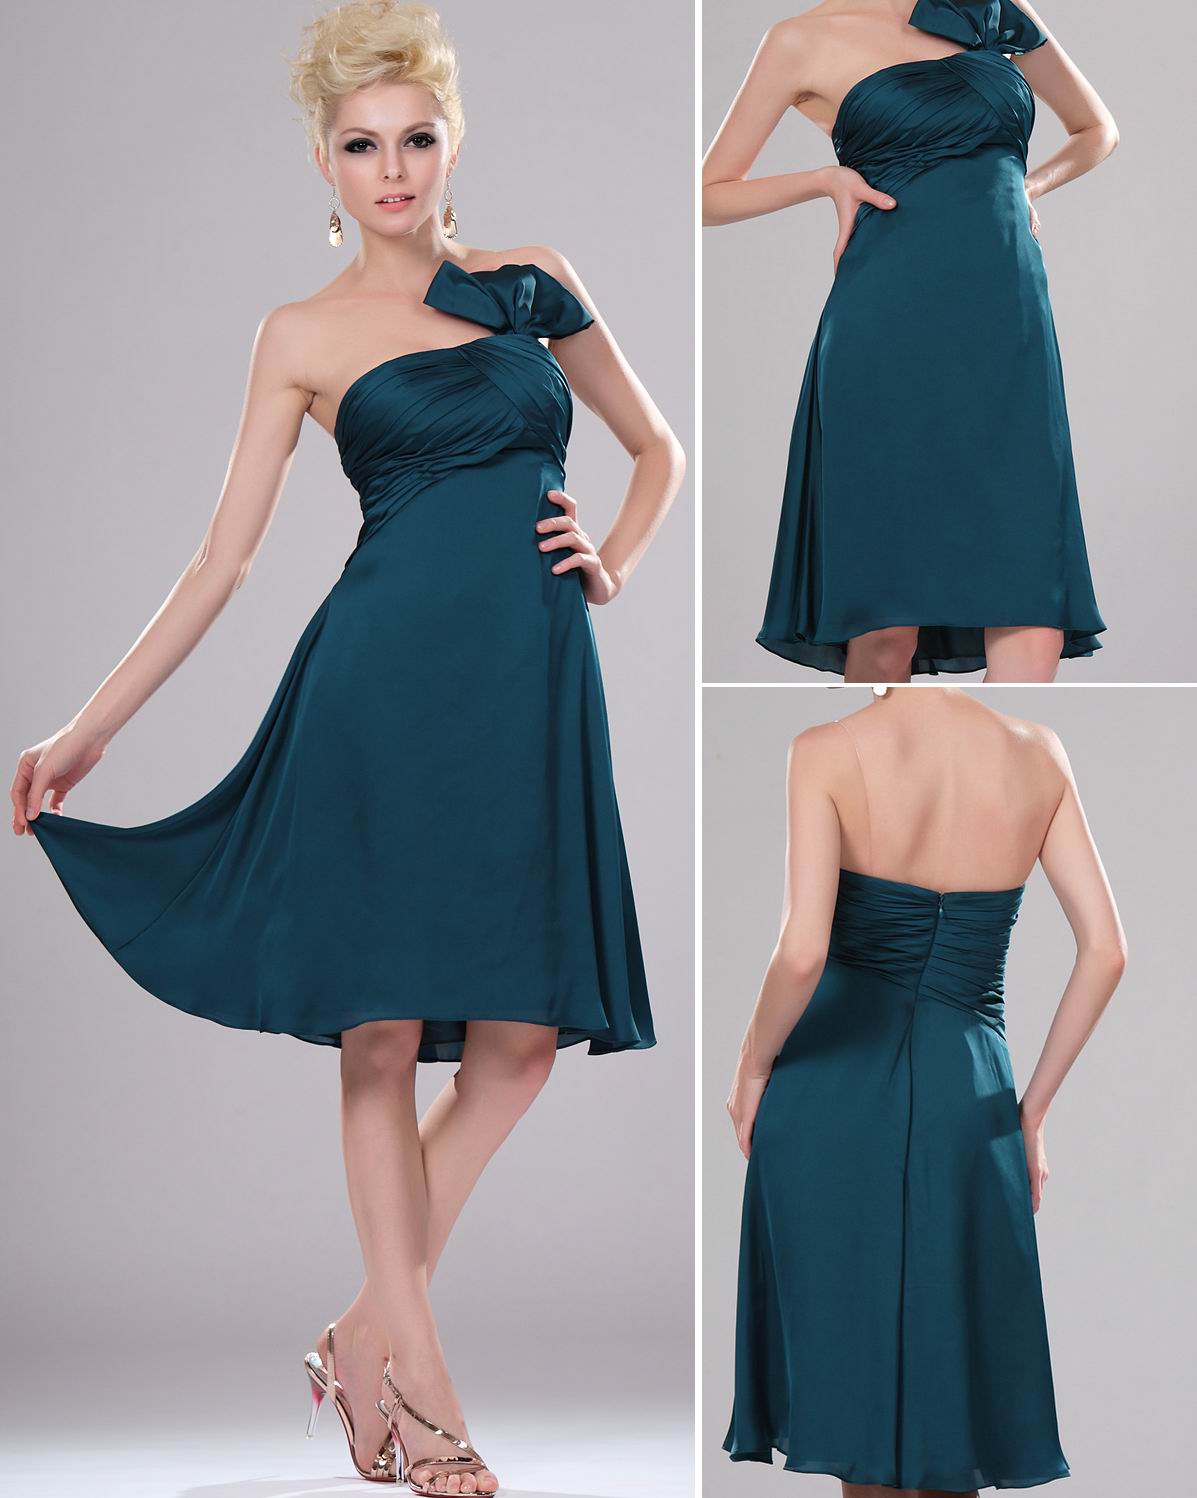 Ink Blue Organza A-line Strapless Short/Mini Bridesmaid Dress(UKBD03-404)